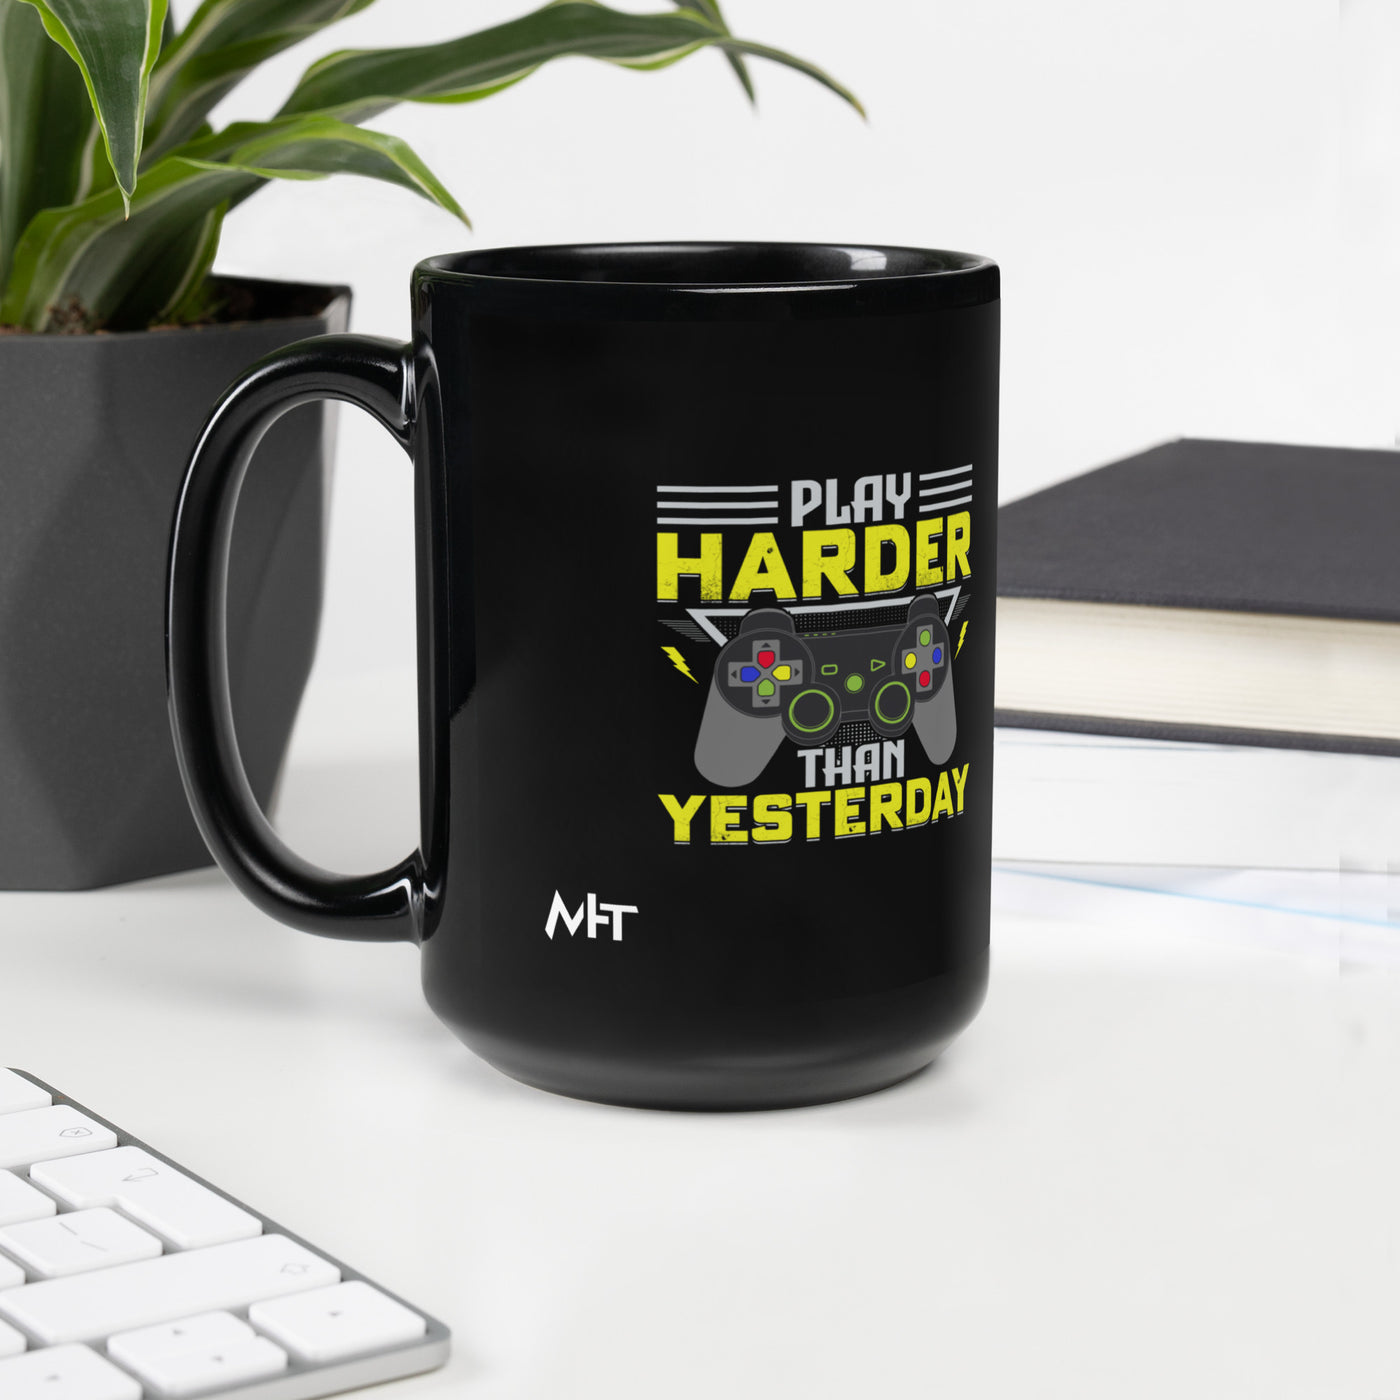 Play harder than Yesterday - Black Glossy Mug